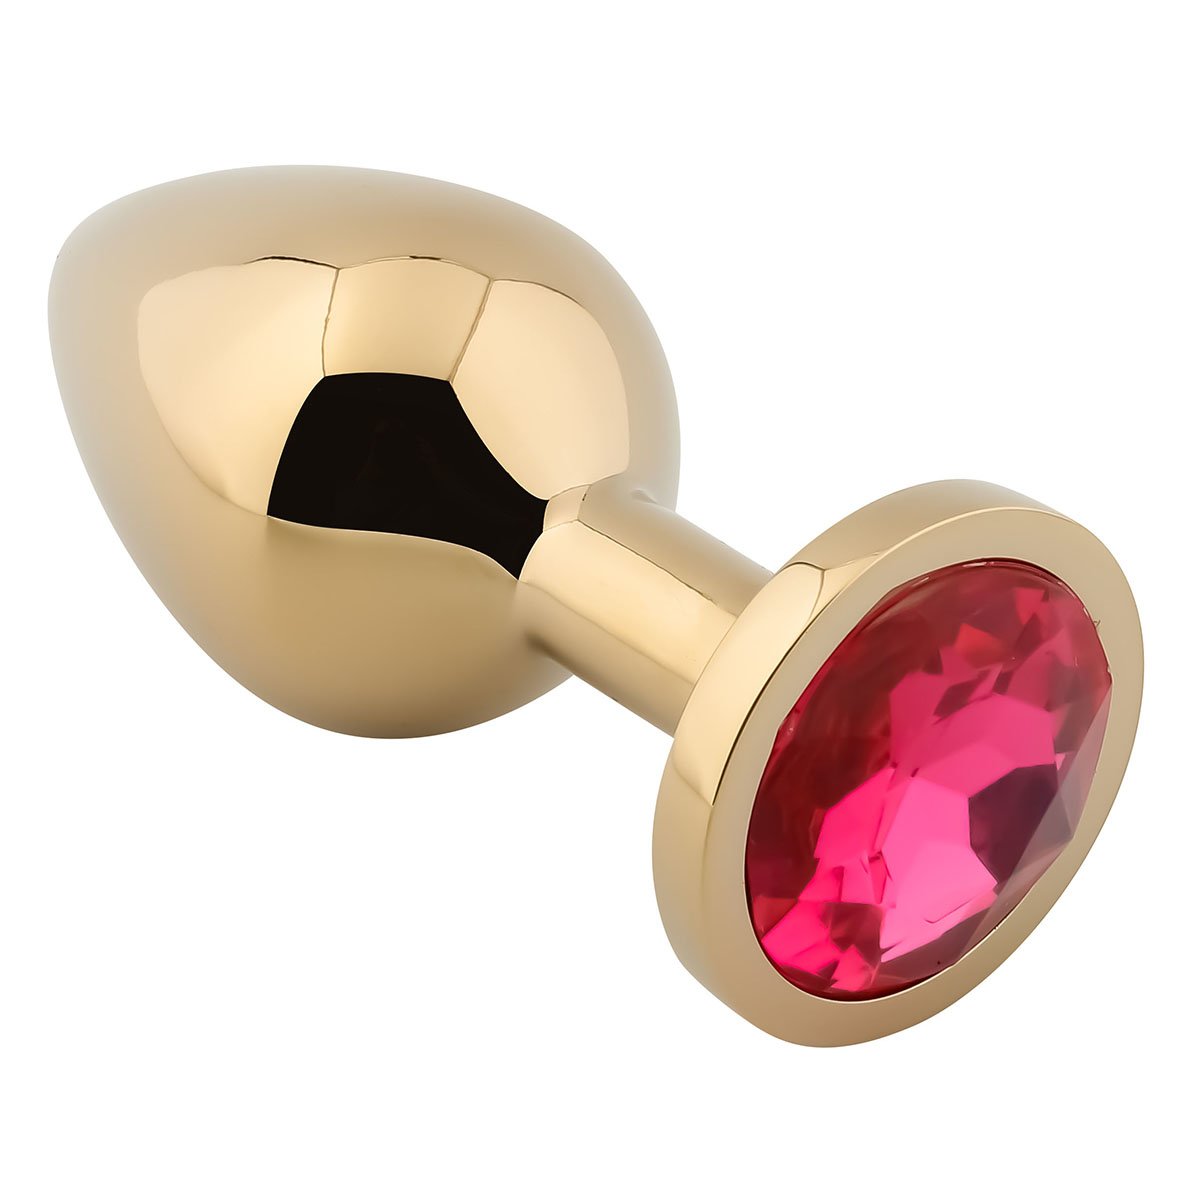 Foto van Banoch - Buttplug Aurora Hot Pink gold Medium - gouden Metalen buttplug - Diamant steen - Roze